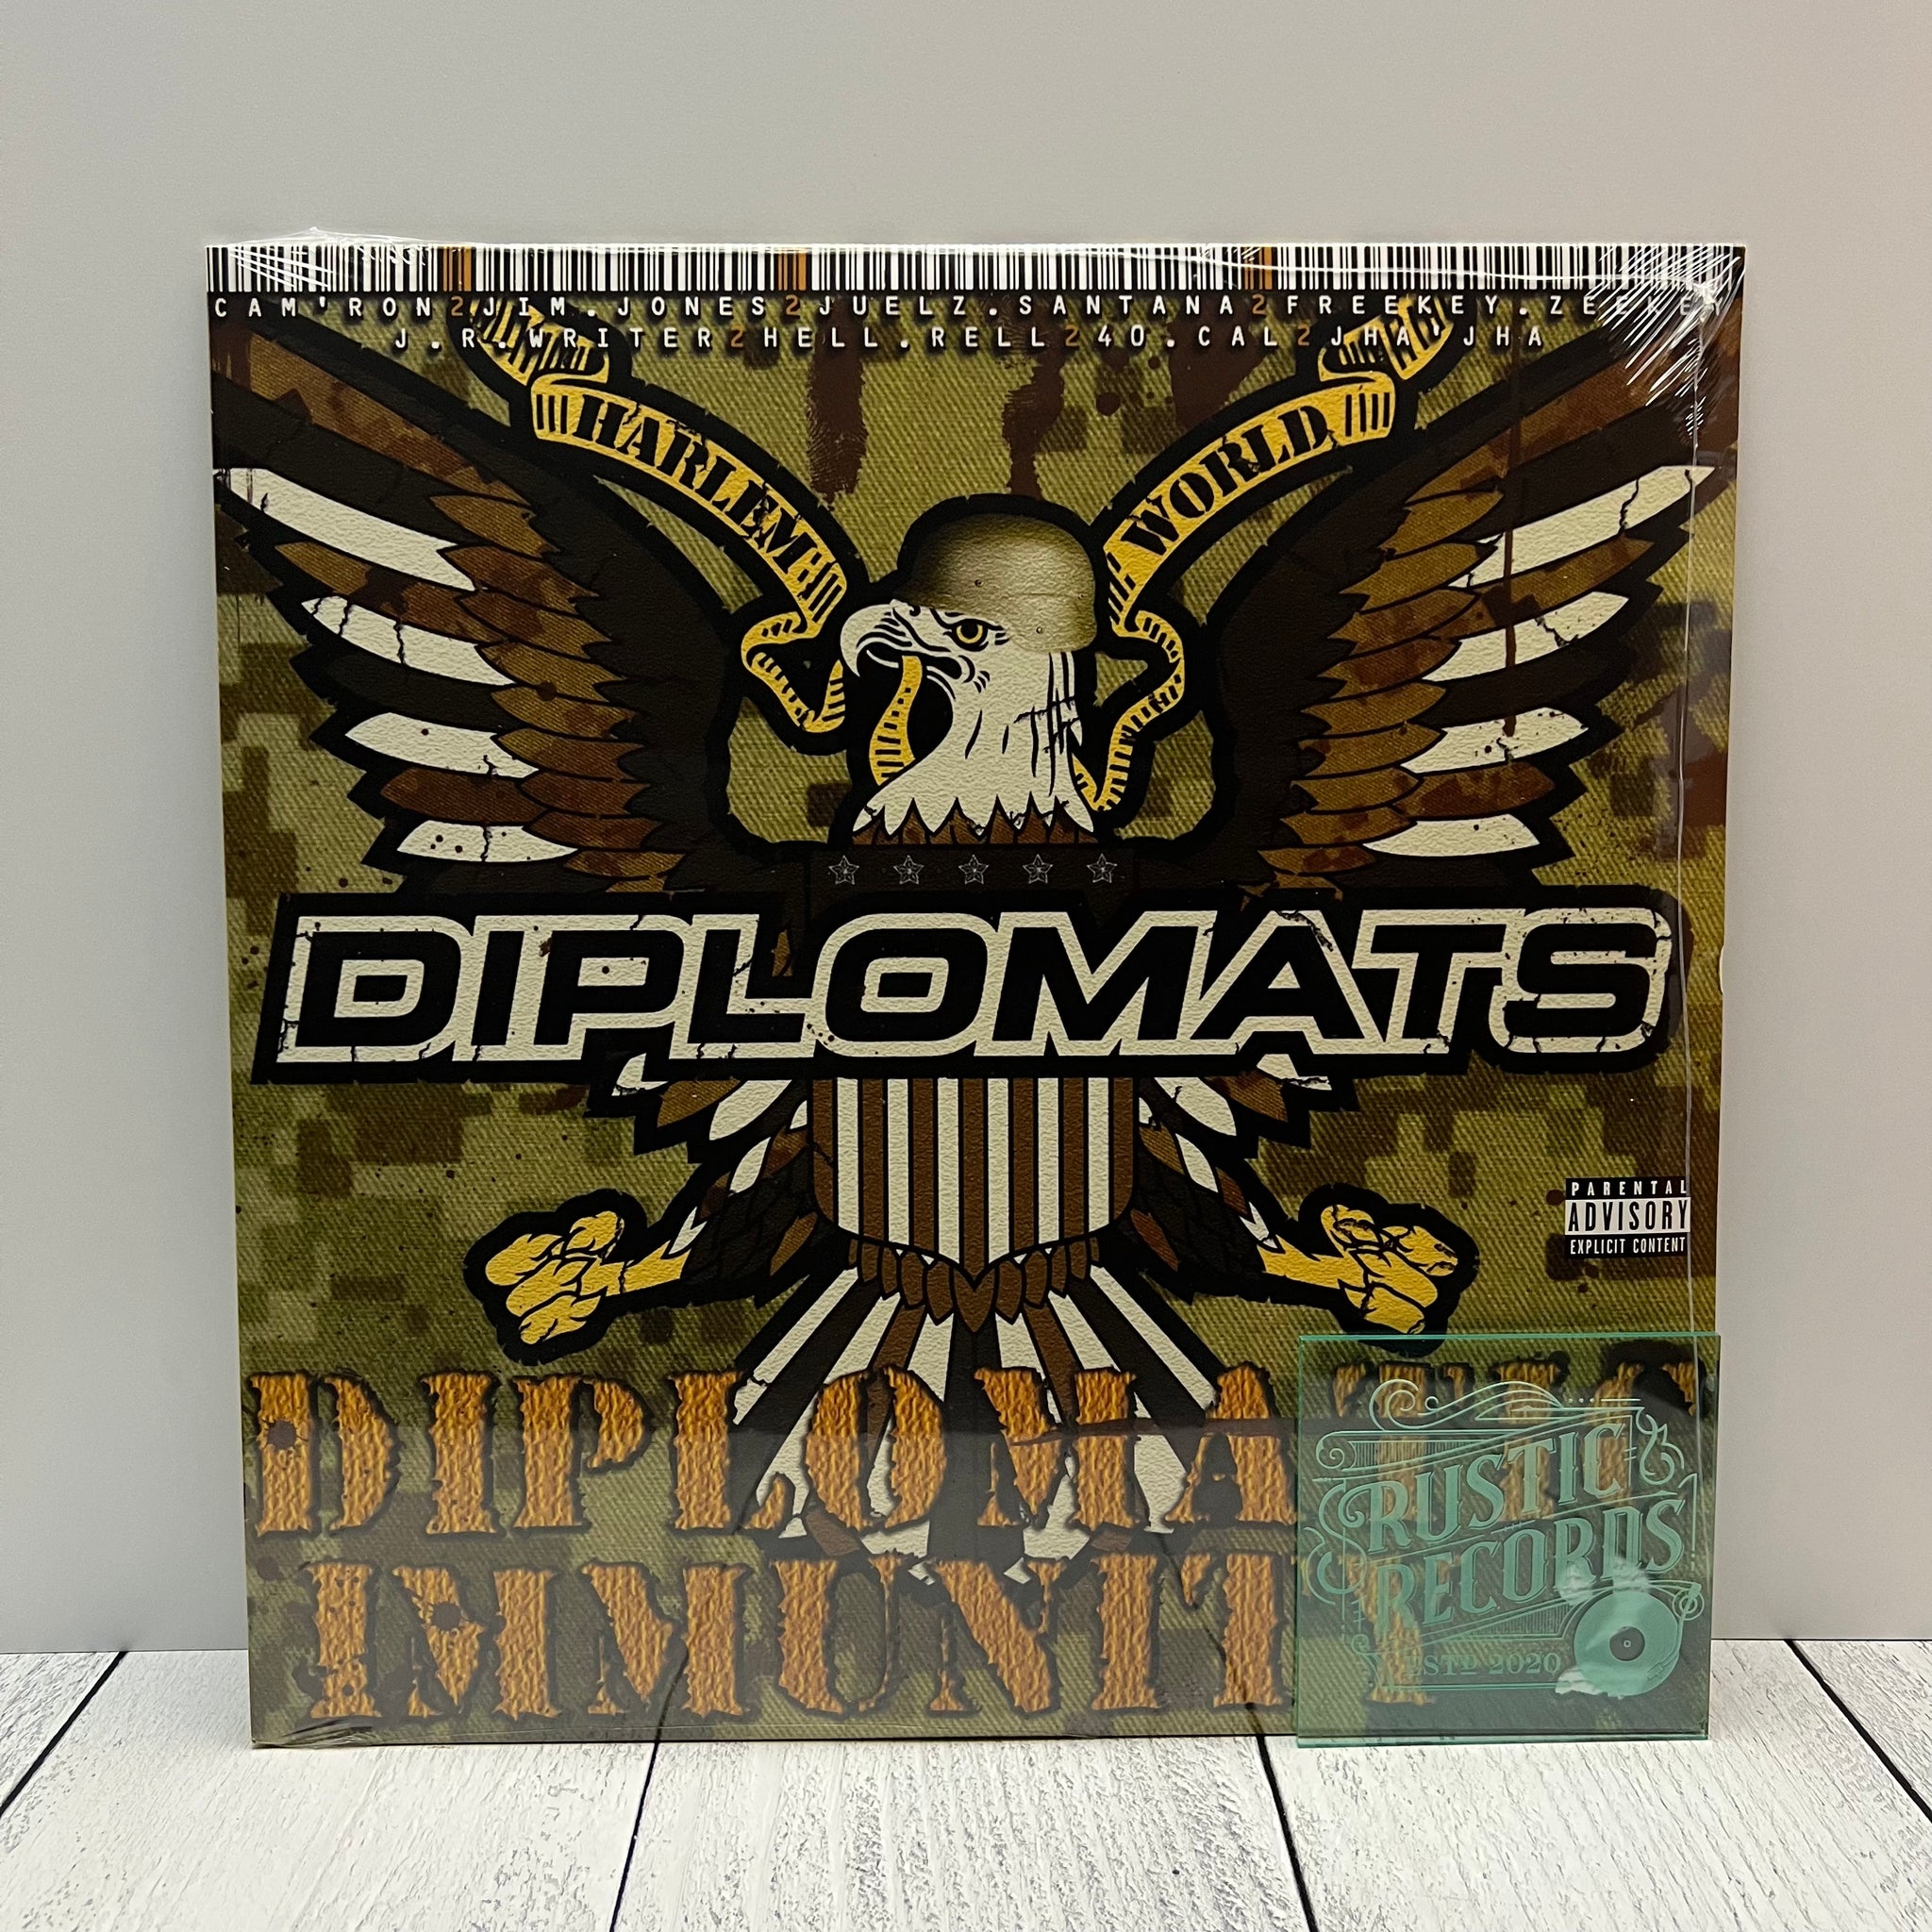 Diplomats - Diplomatic Immunity 2 (Orange Vinyl)